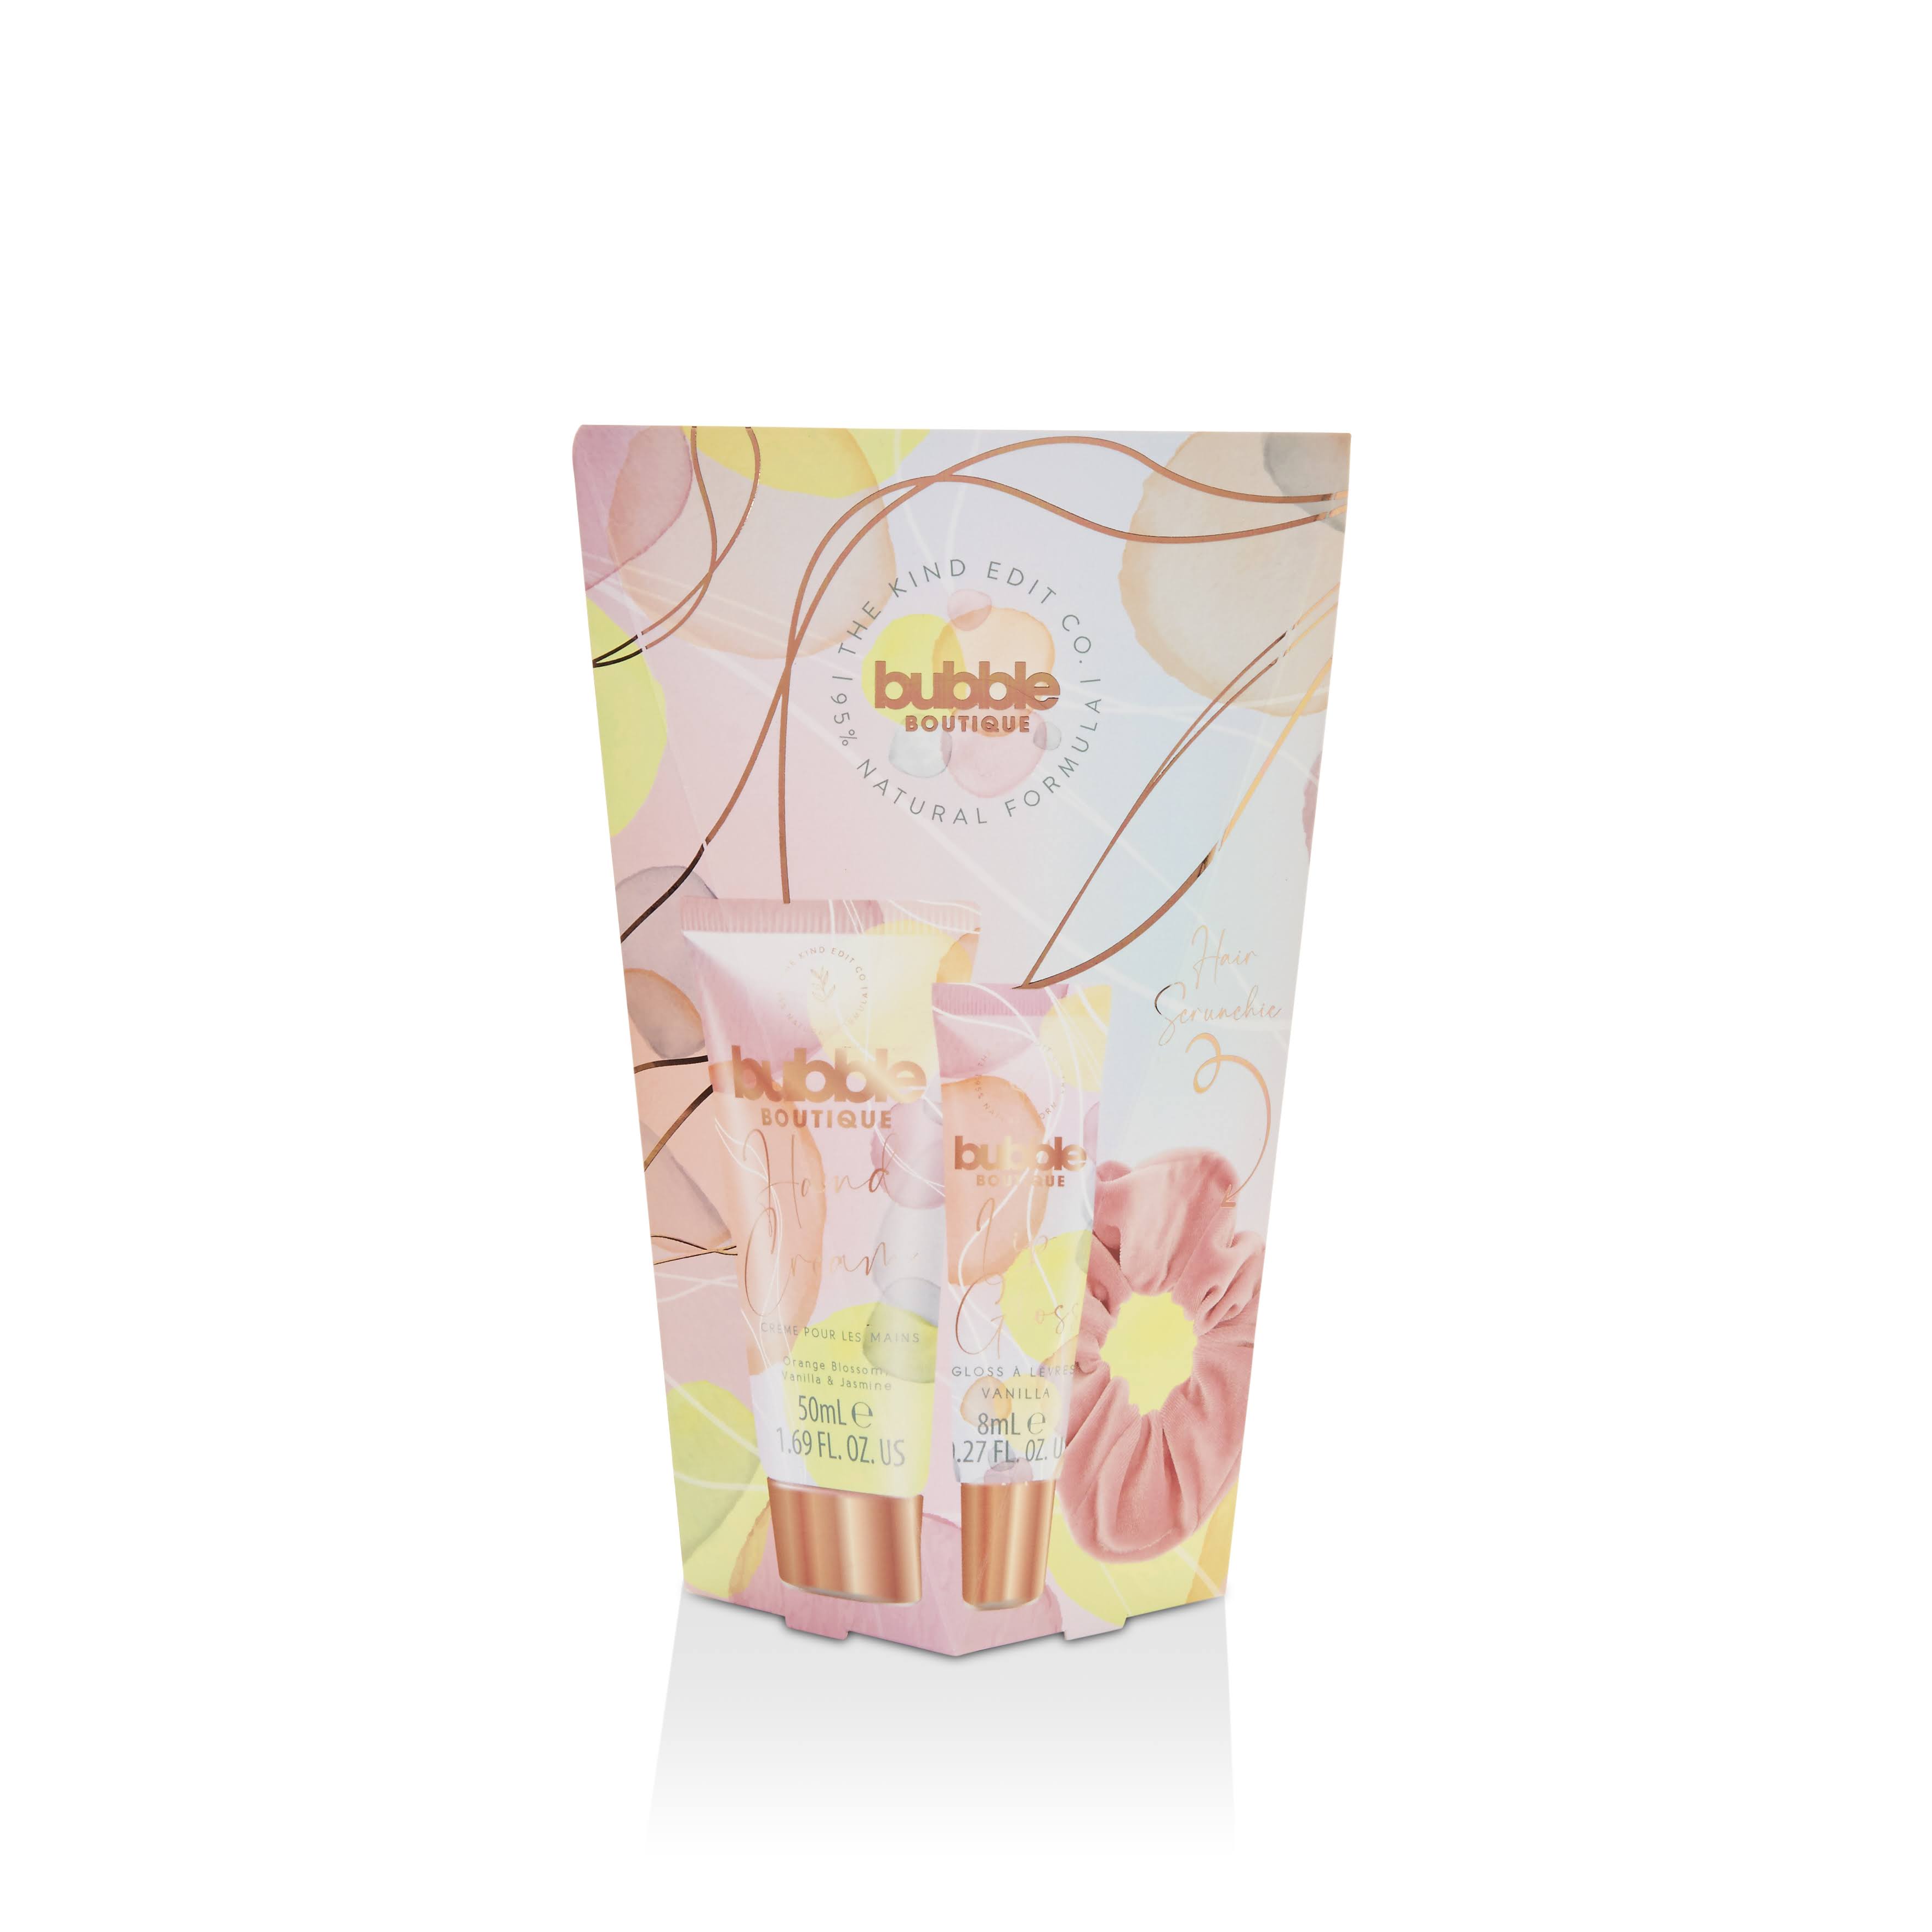 The Kind Edit Co. Bubble Boutique Scrunchie Gift Set 50ml Hand Cream + 8ml Lip Balm + Scrunchie